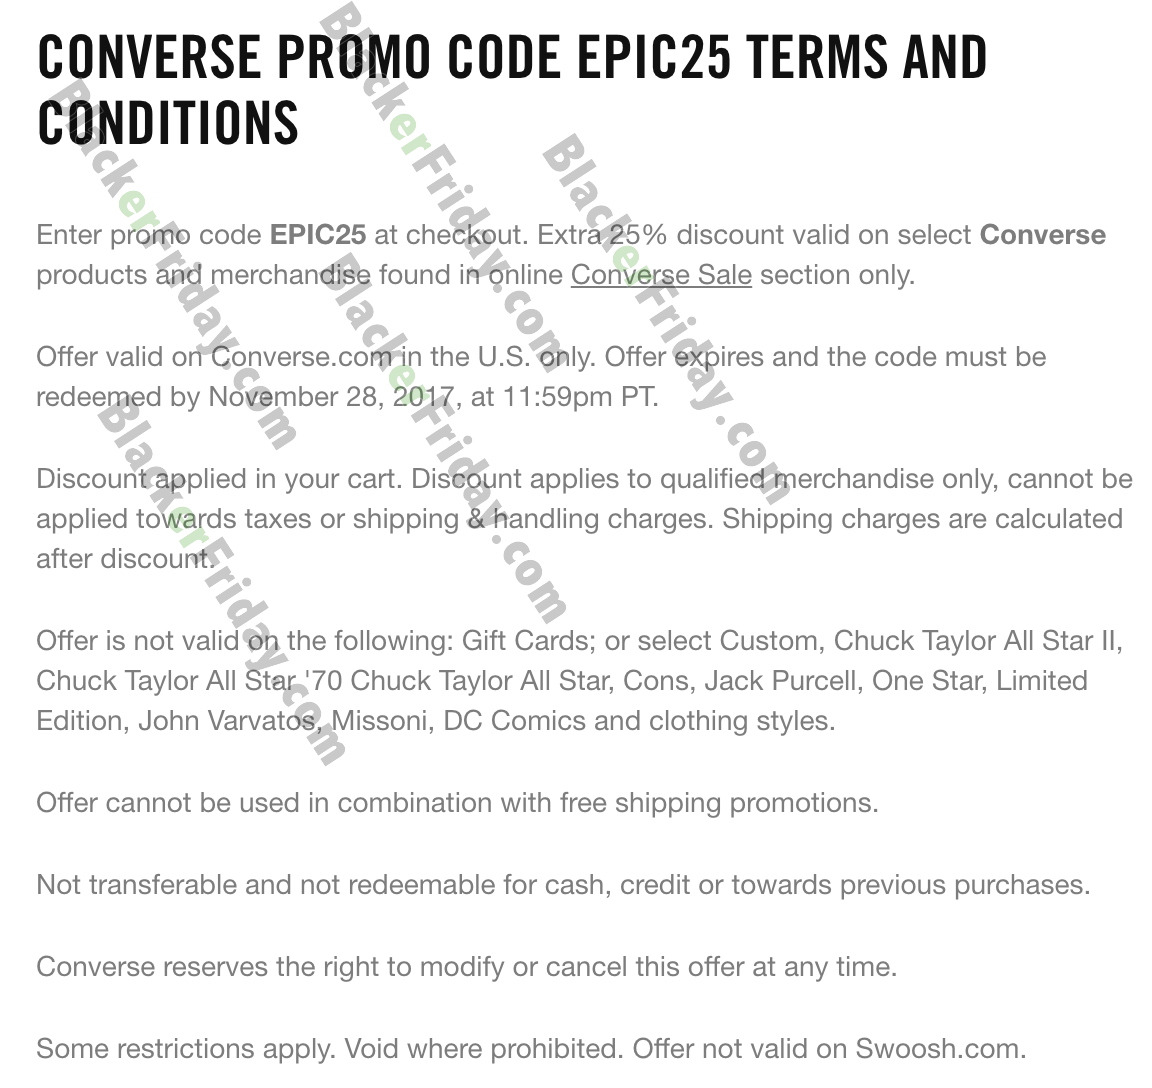 converse promo code 2015